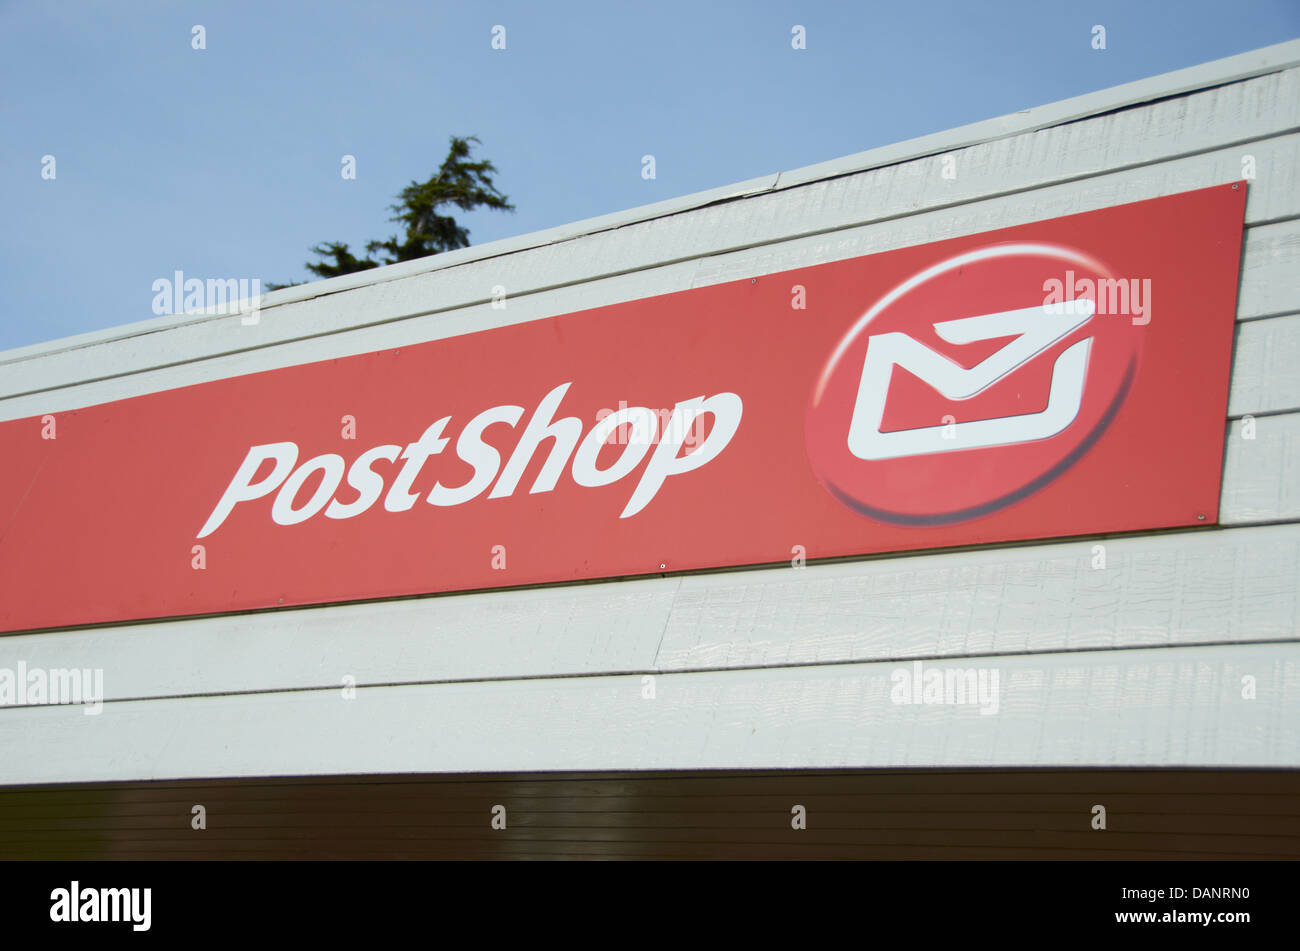 Postshop in New Zealand Stock Photo